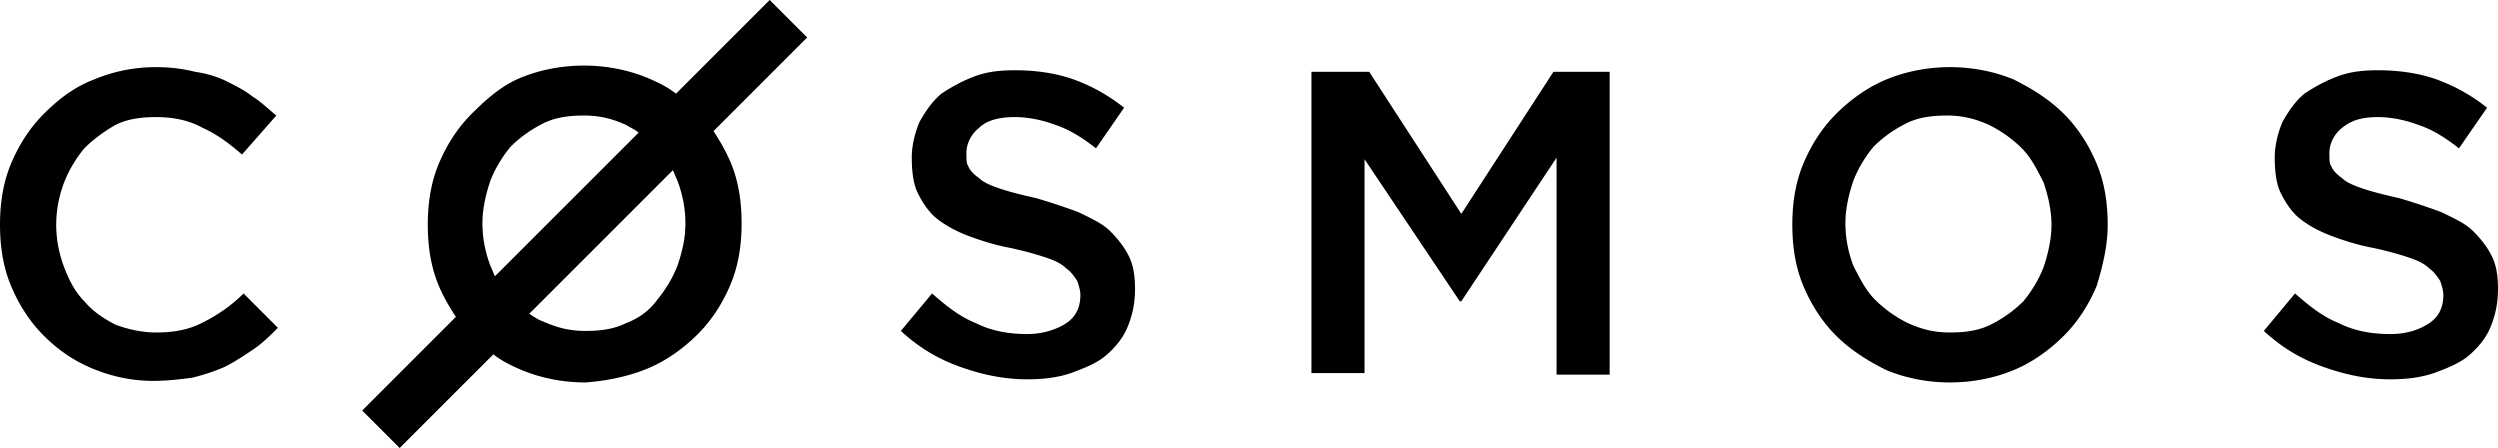 cosmos atom logo